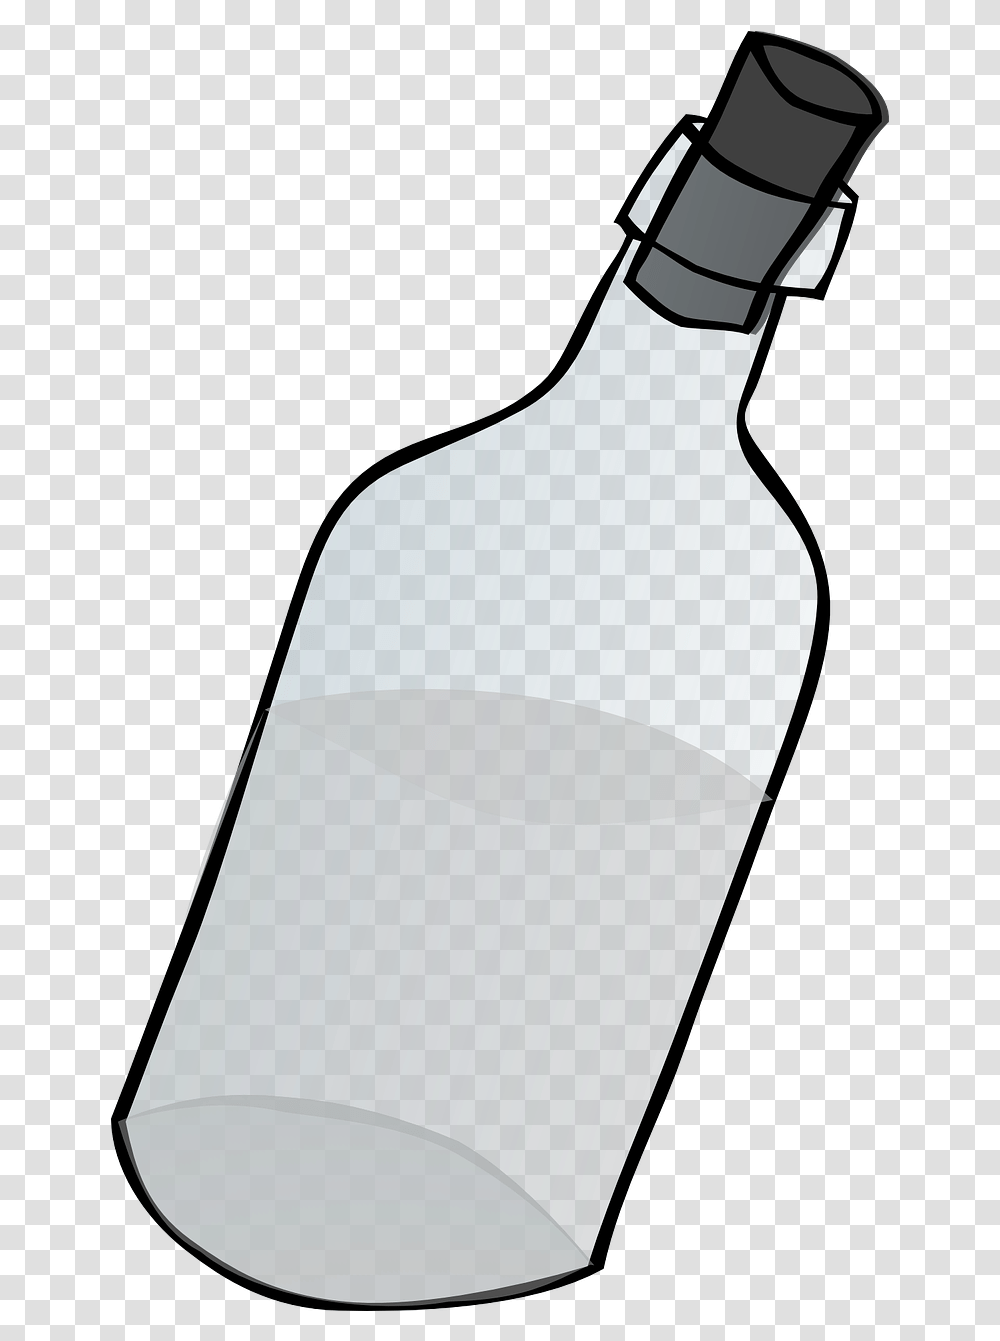 Bottle Clear Glass Free Vector Graphic On Pixabay Glass Bottle Black And White Clipart, Beverage, Drink, Milk, Pop Bottle Transparent Png